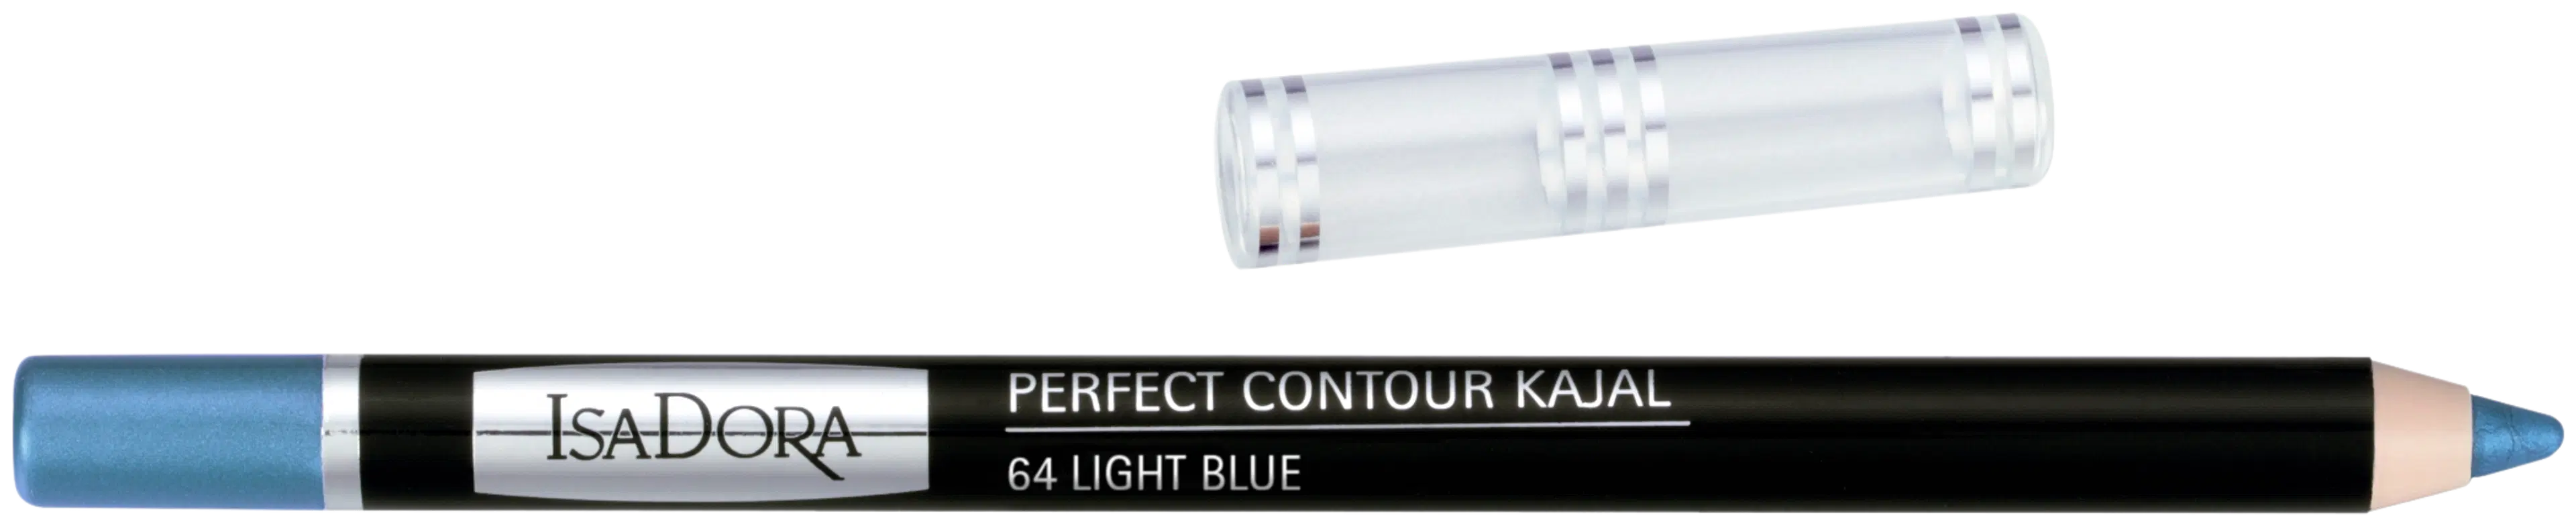 IsaDora Perfect Contour Kajal 64 Light Blue